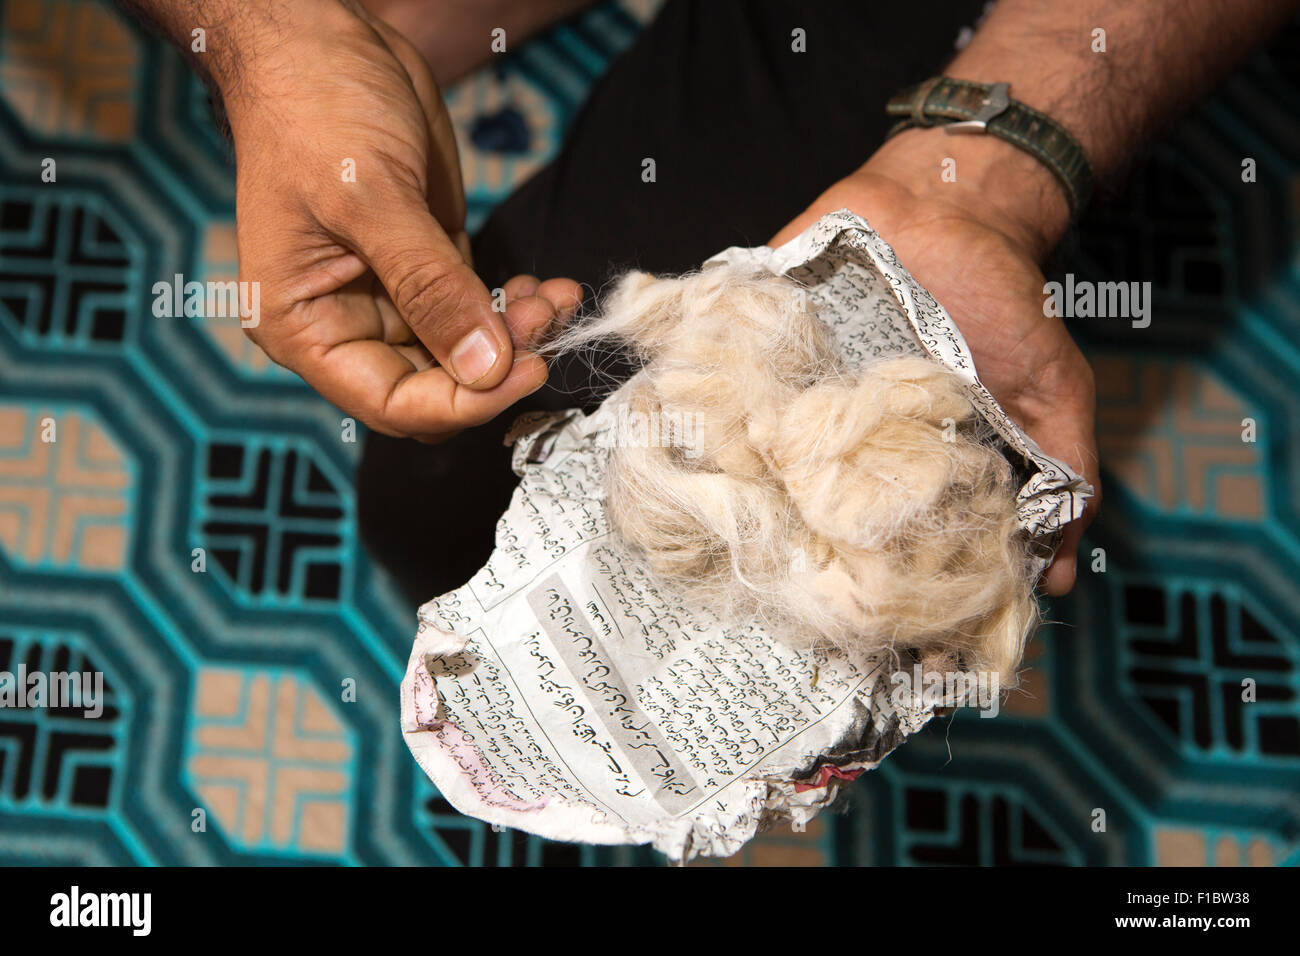 India, Jammu & Kashmir, Srinagar, hands holding unprocessed raw pashmina wool wrapped in Kashmiri language newspaper Stock Photo